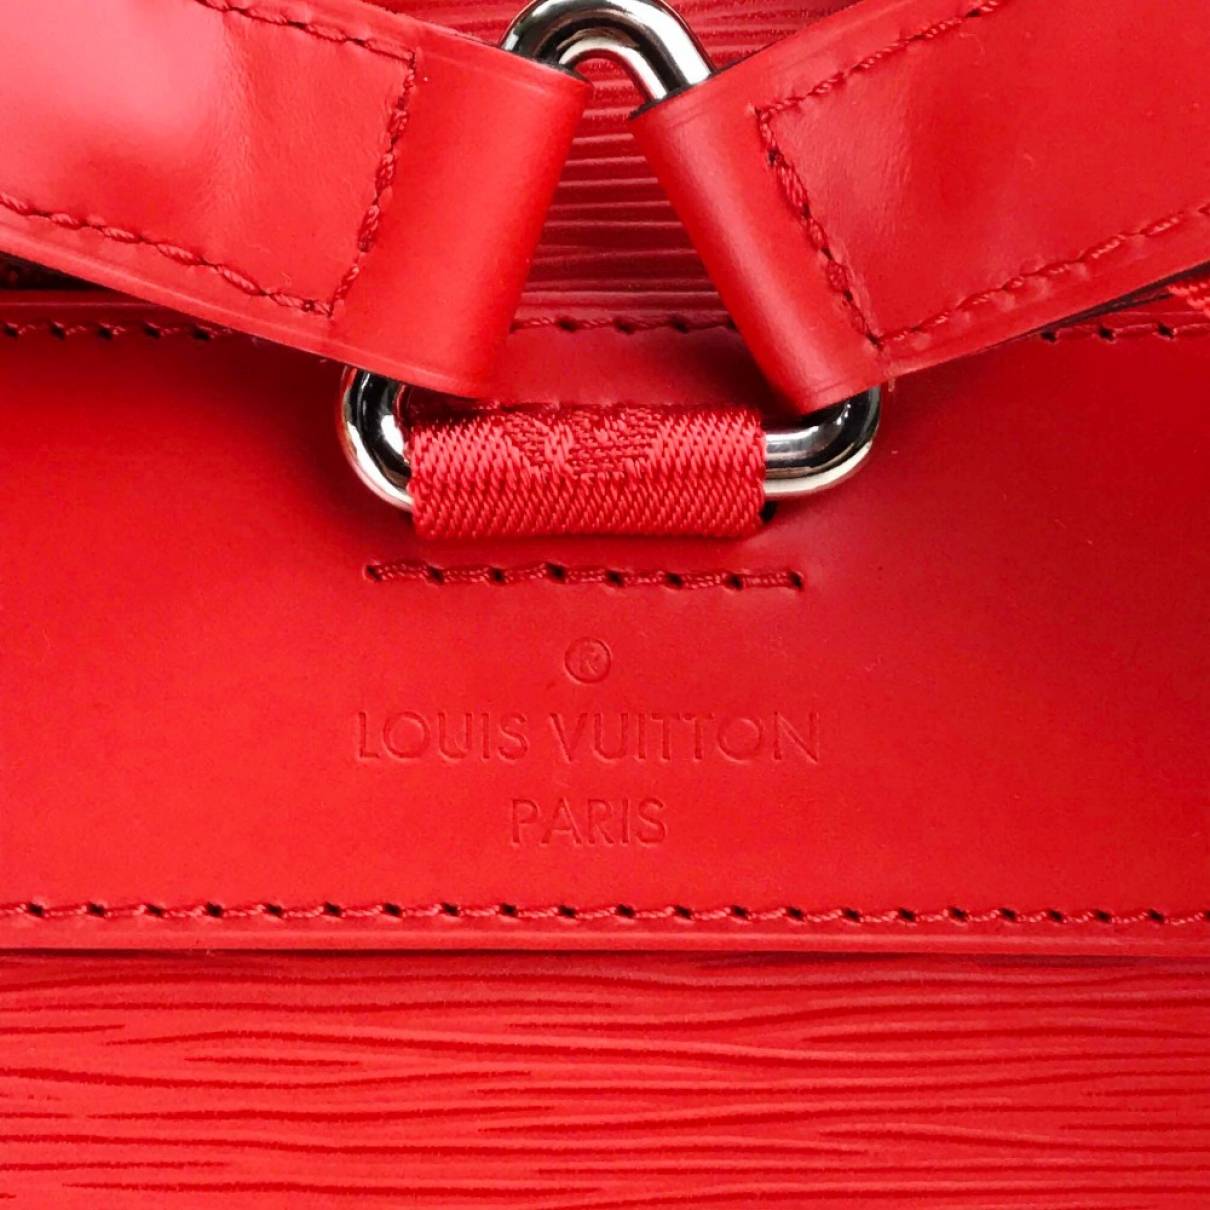 Mochila Supreme Louis Vuitton Original